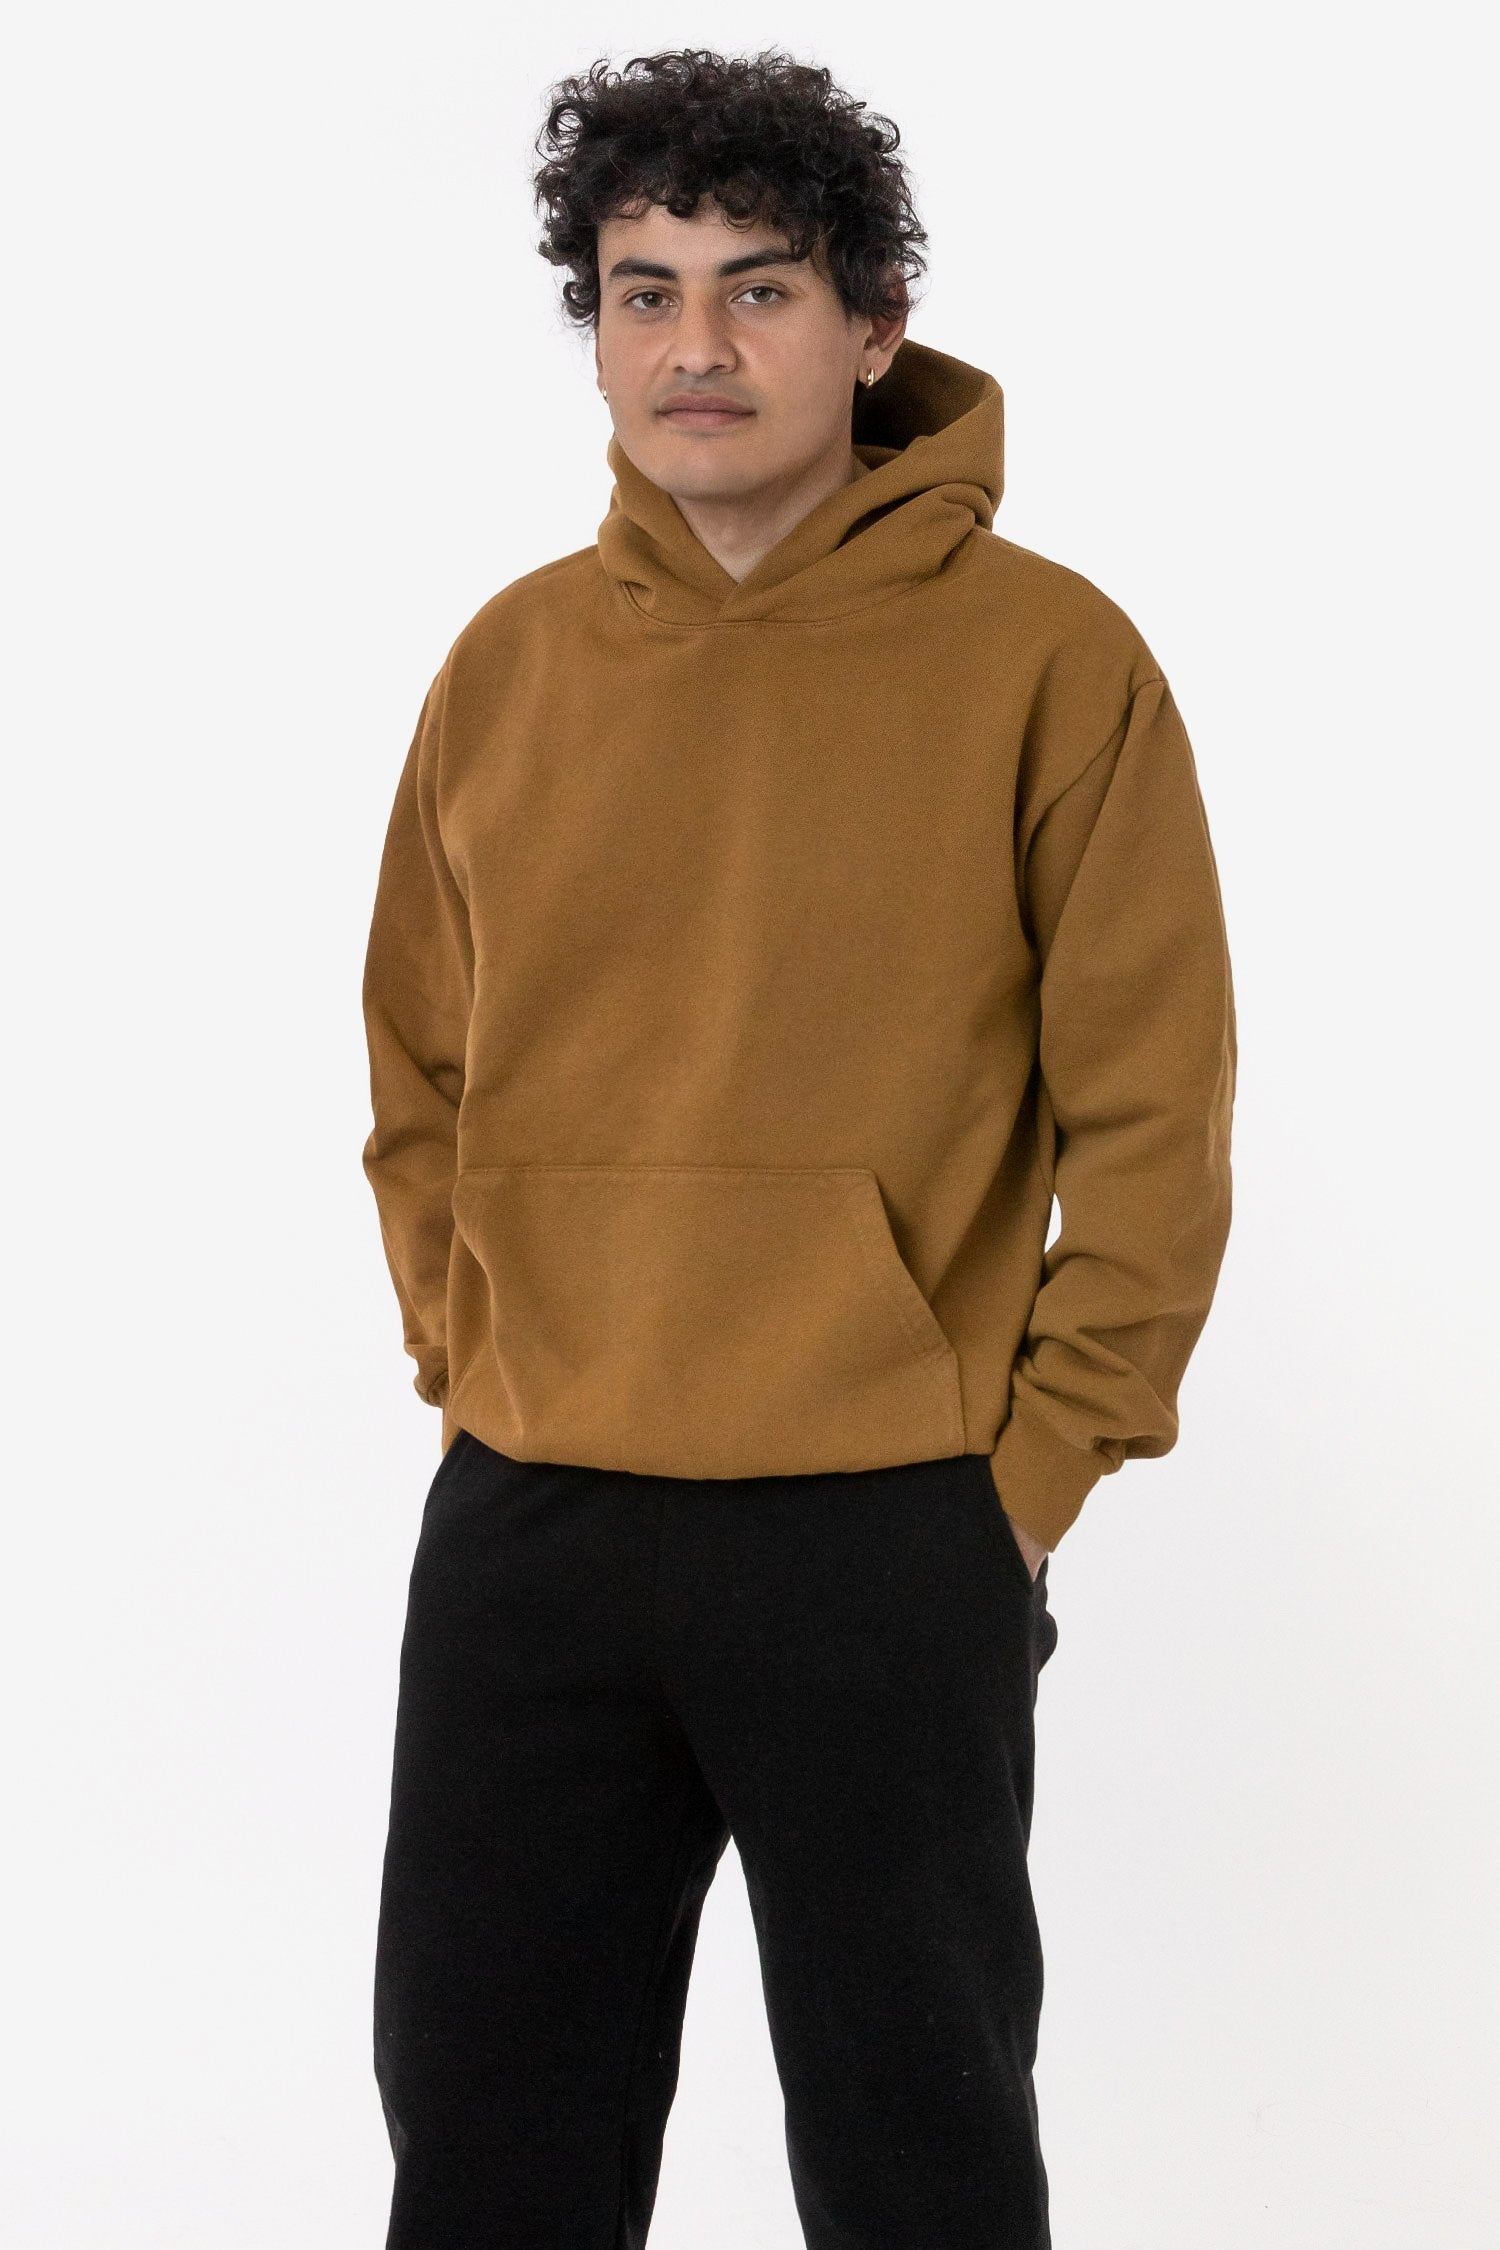 HF09GD Mix - Garment Dye 14oz. Heavy Fleece Hooded Pullover Sweatshirt (New  & Now)